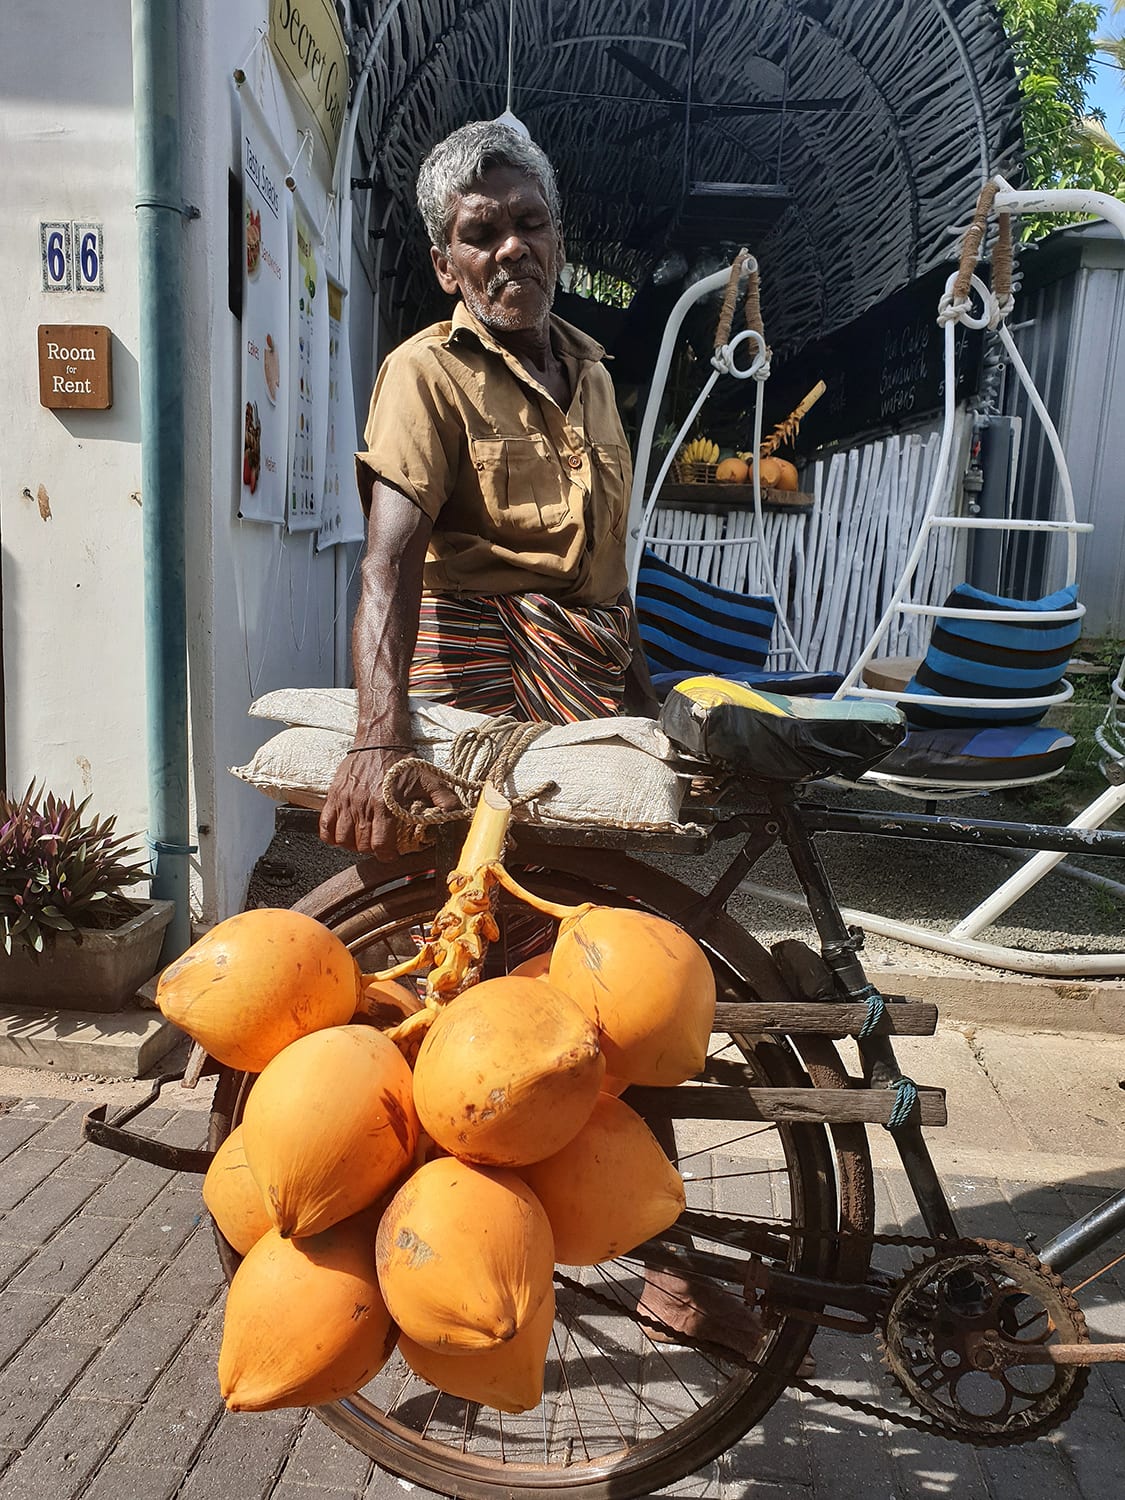 Mango trader in Sri Lanka with an old bike